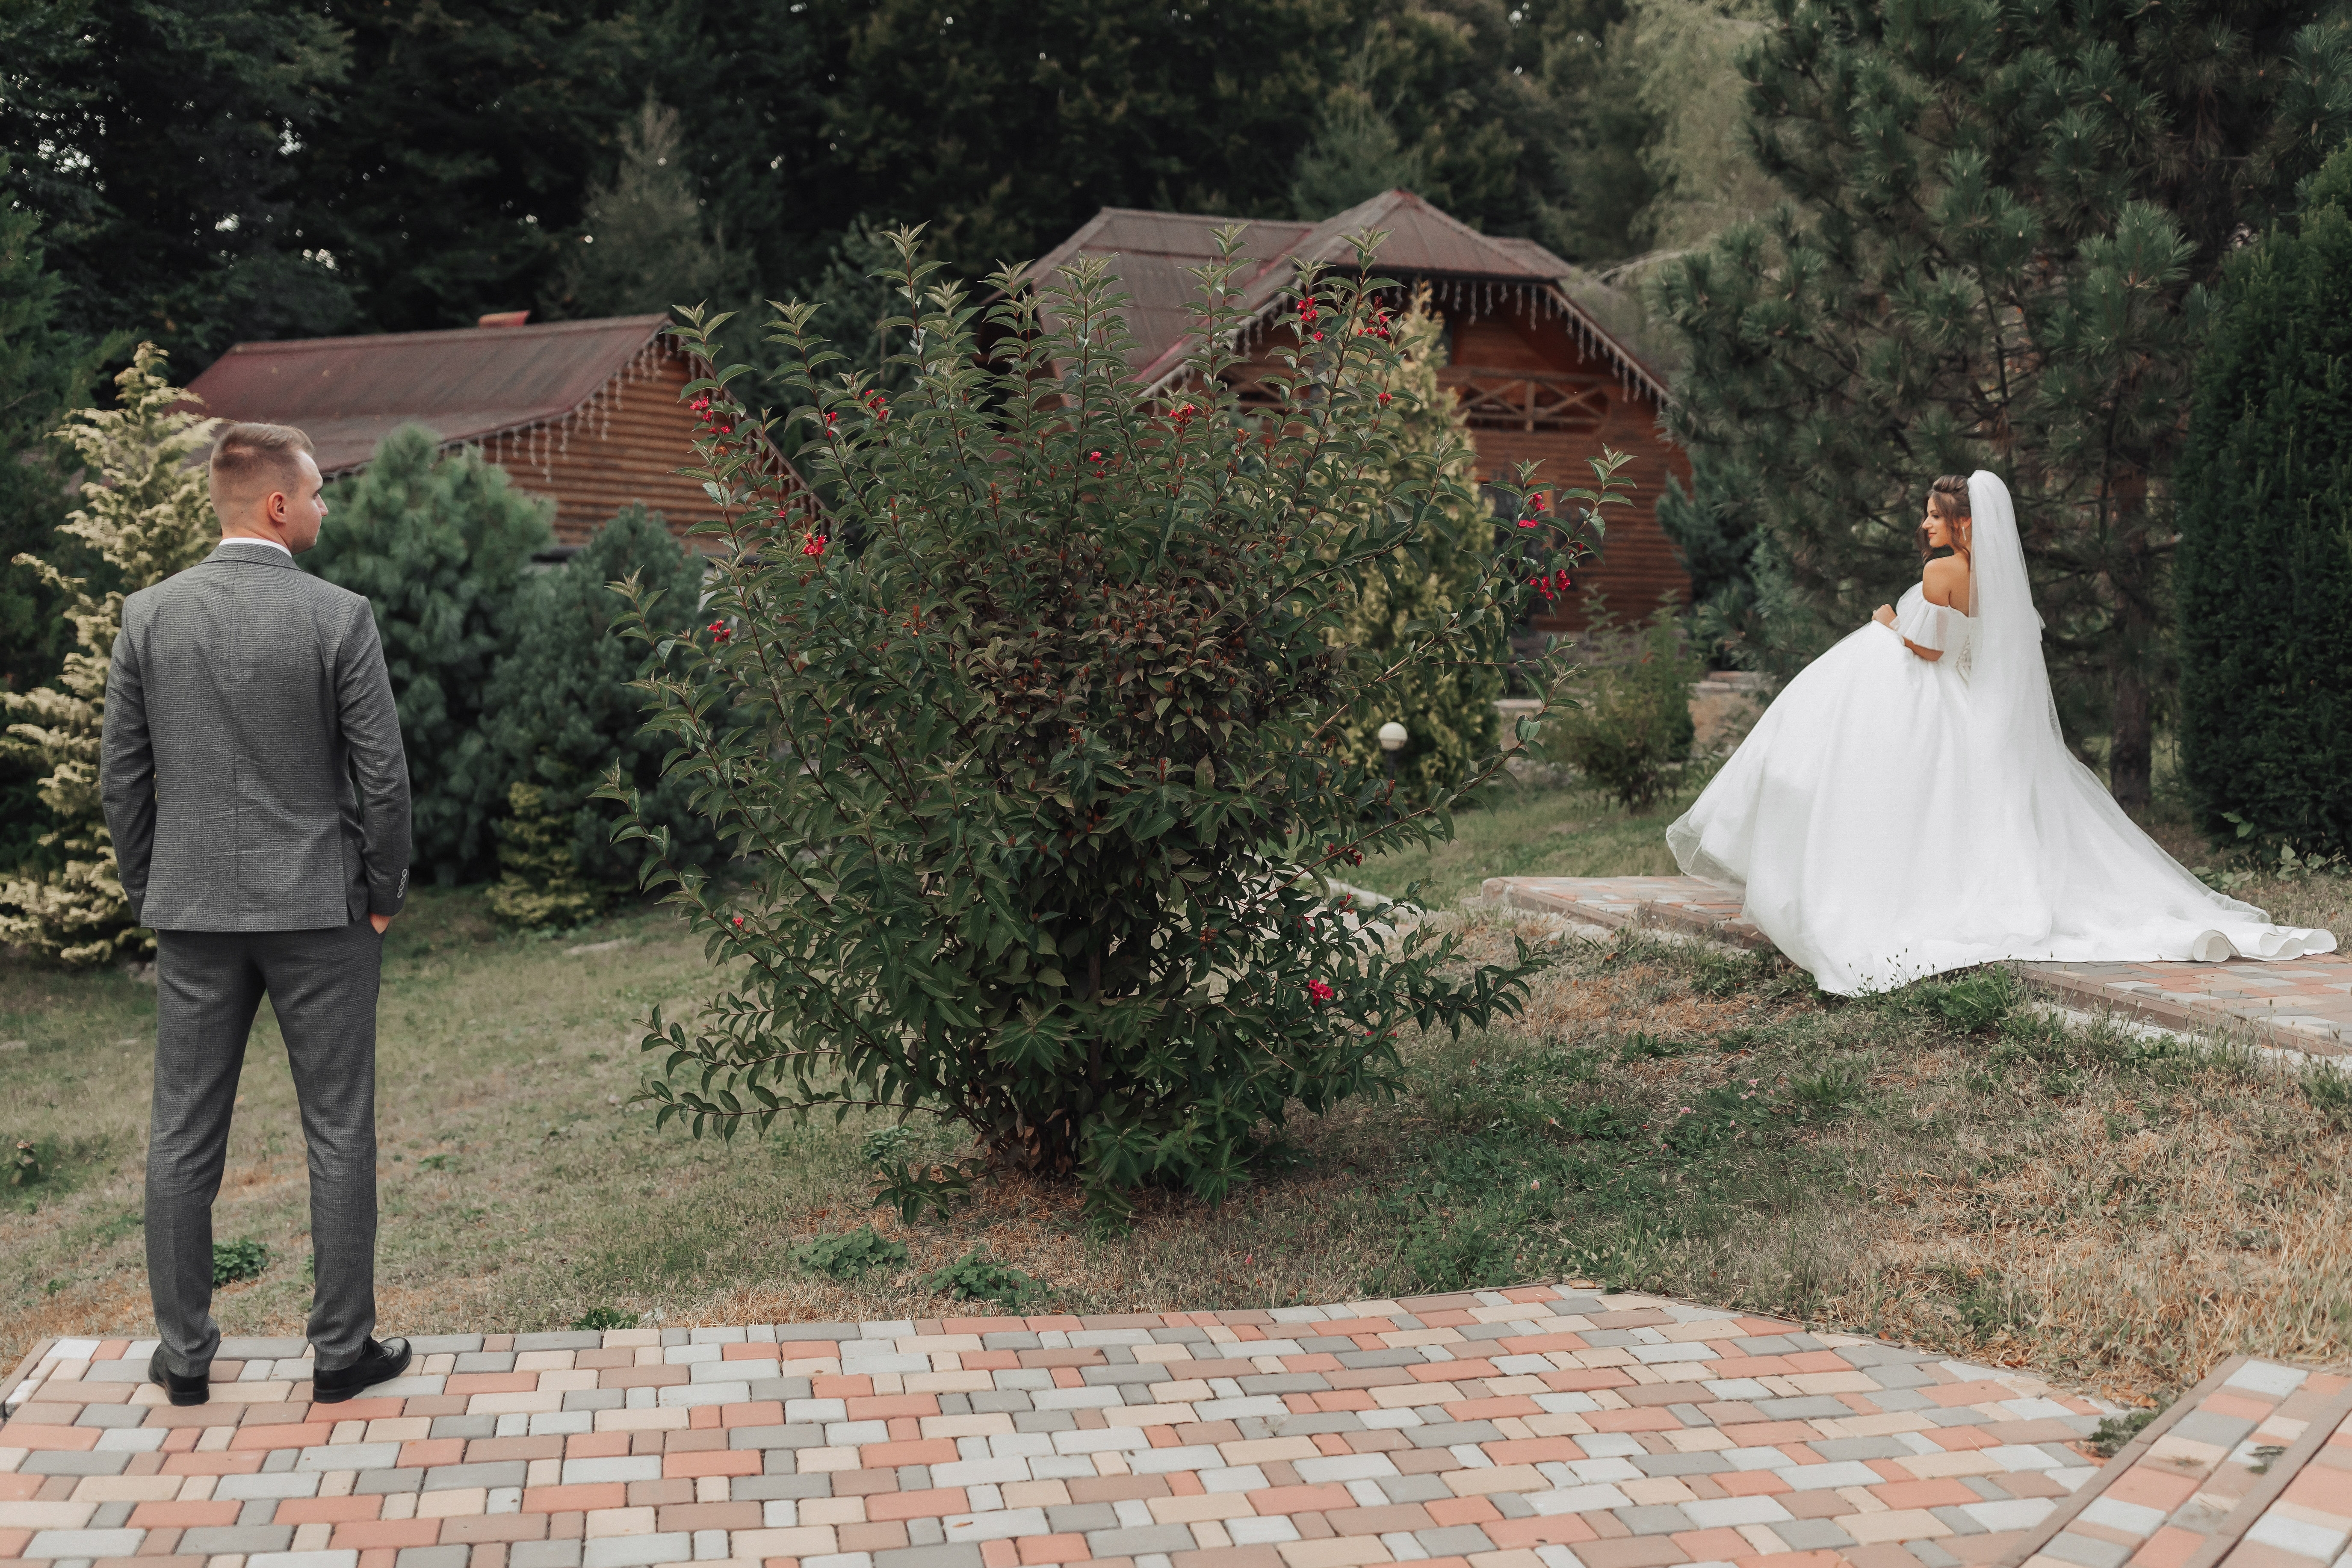 Bride and groom standing far apart | Source: Shutterstock